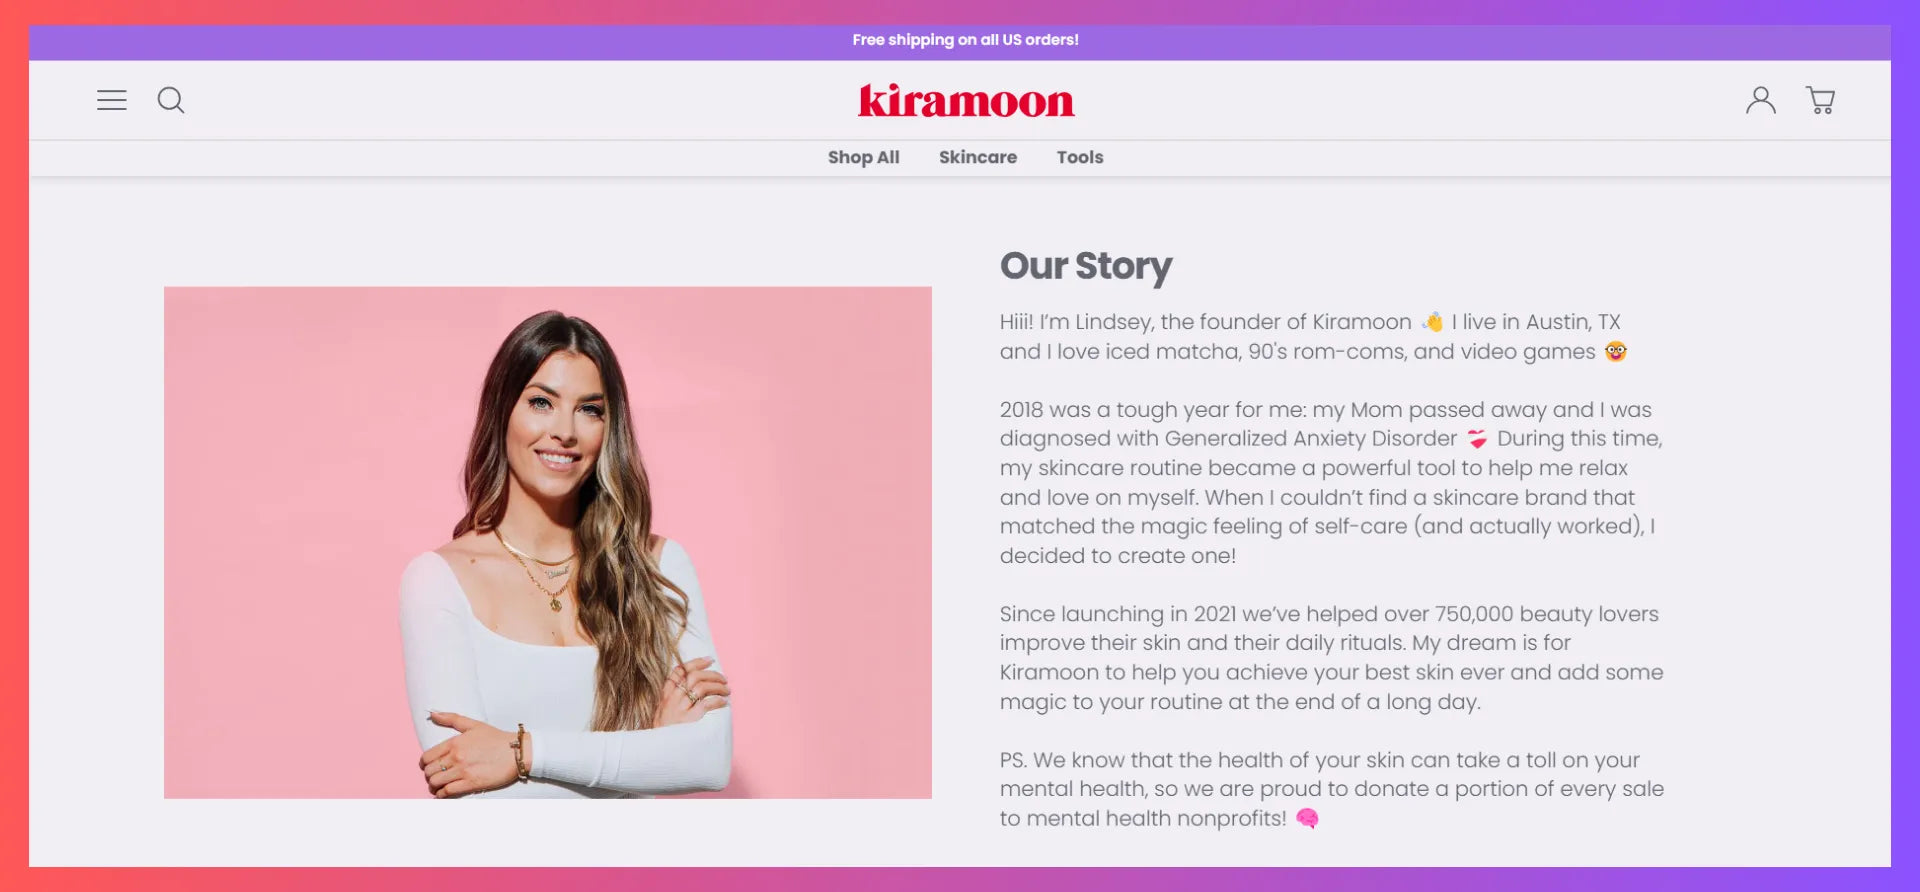 The story of Kiramoon founder - Lindsey